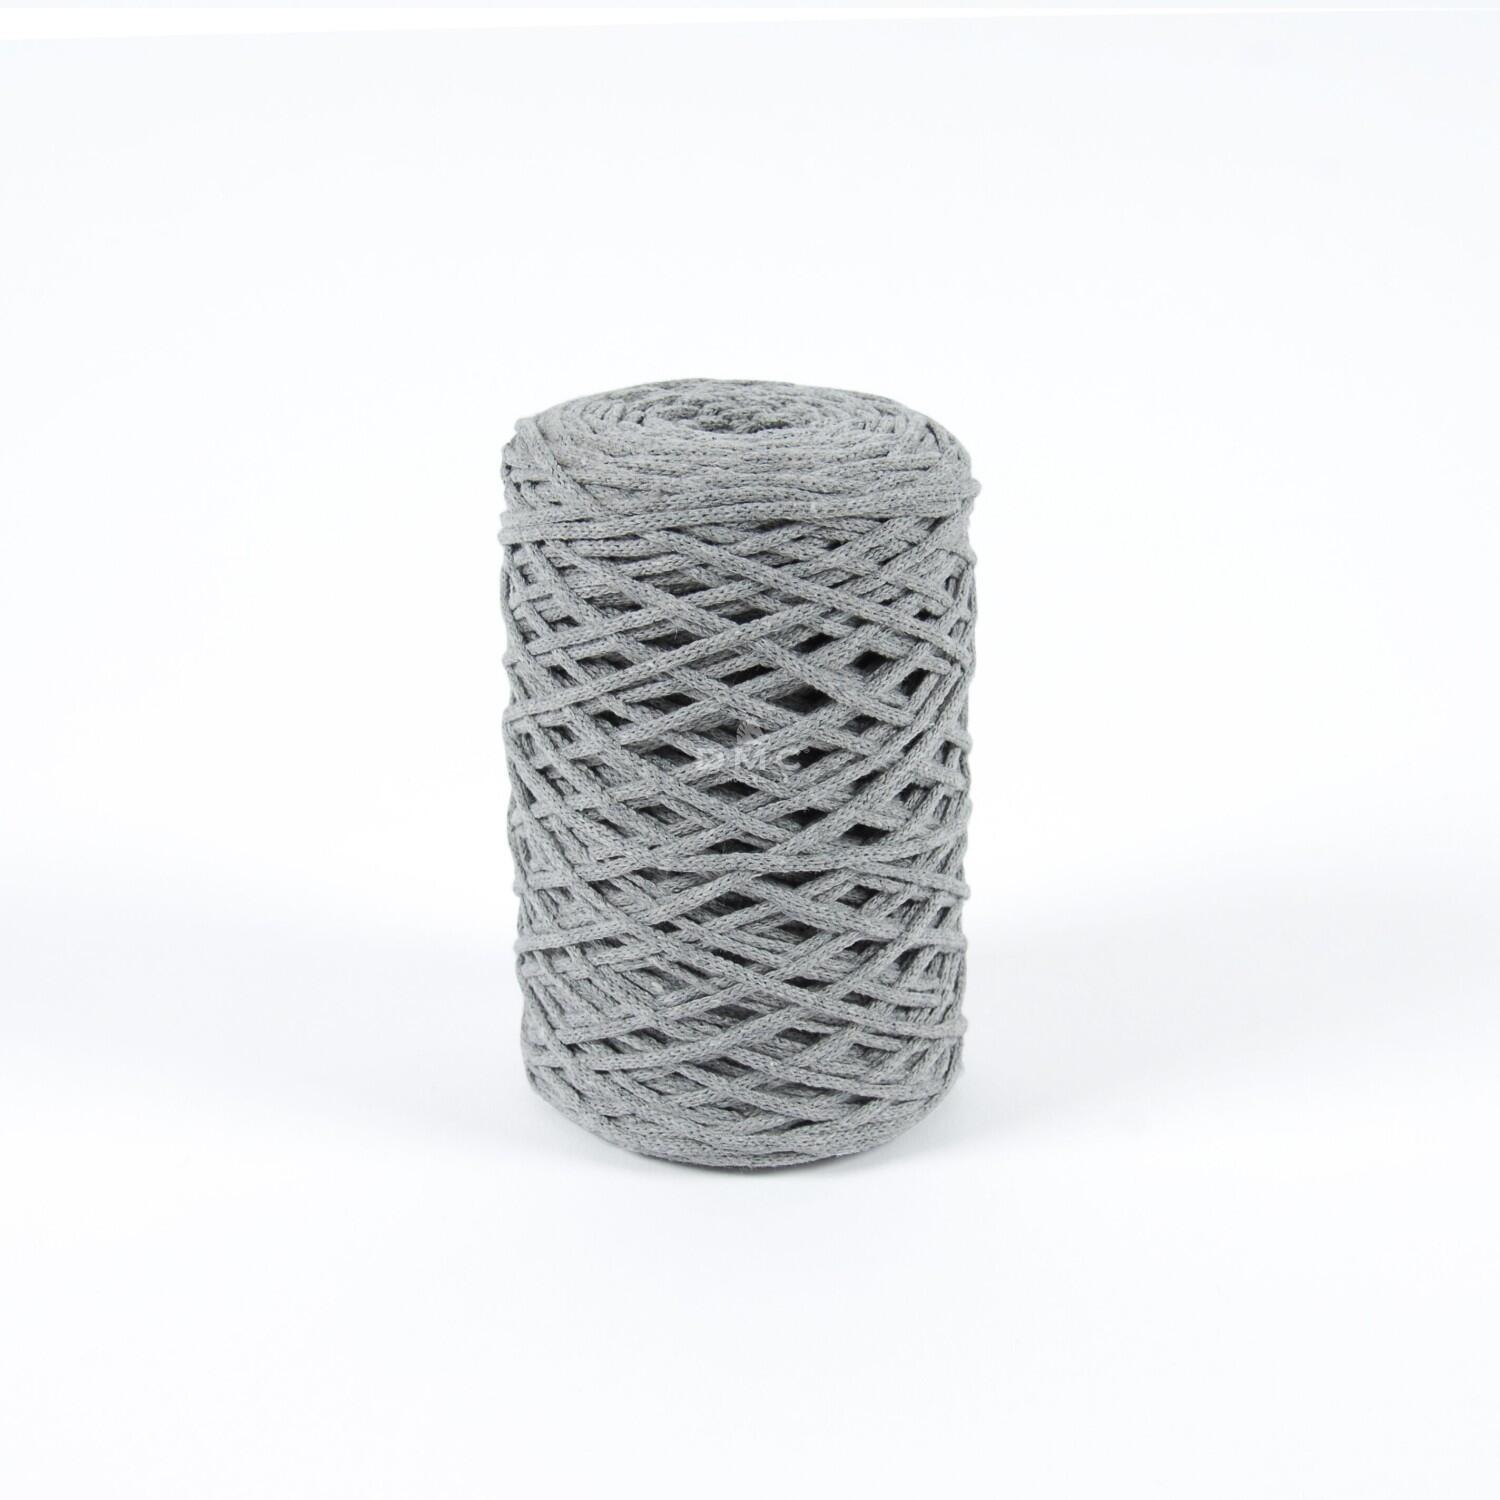 DMC Nova Vita 4 UNI - Makrameegarn aus recycelter Baumwolle Farbe: 122 gris clair